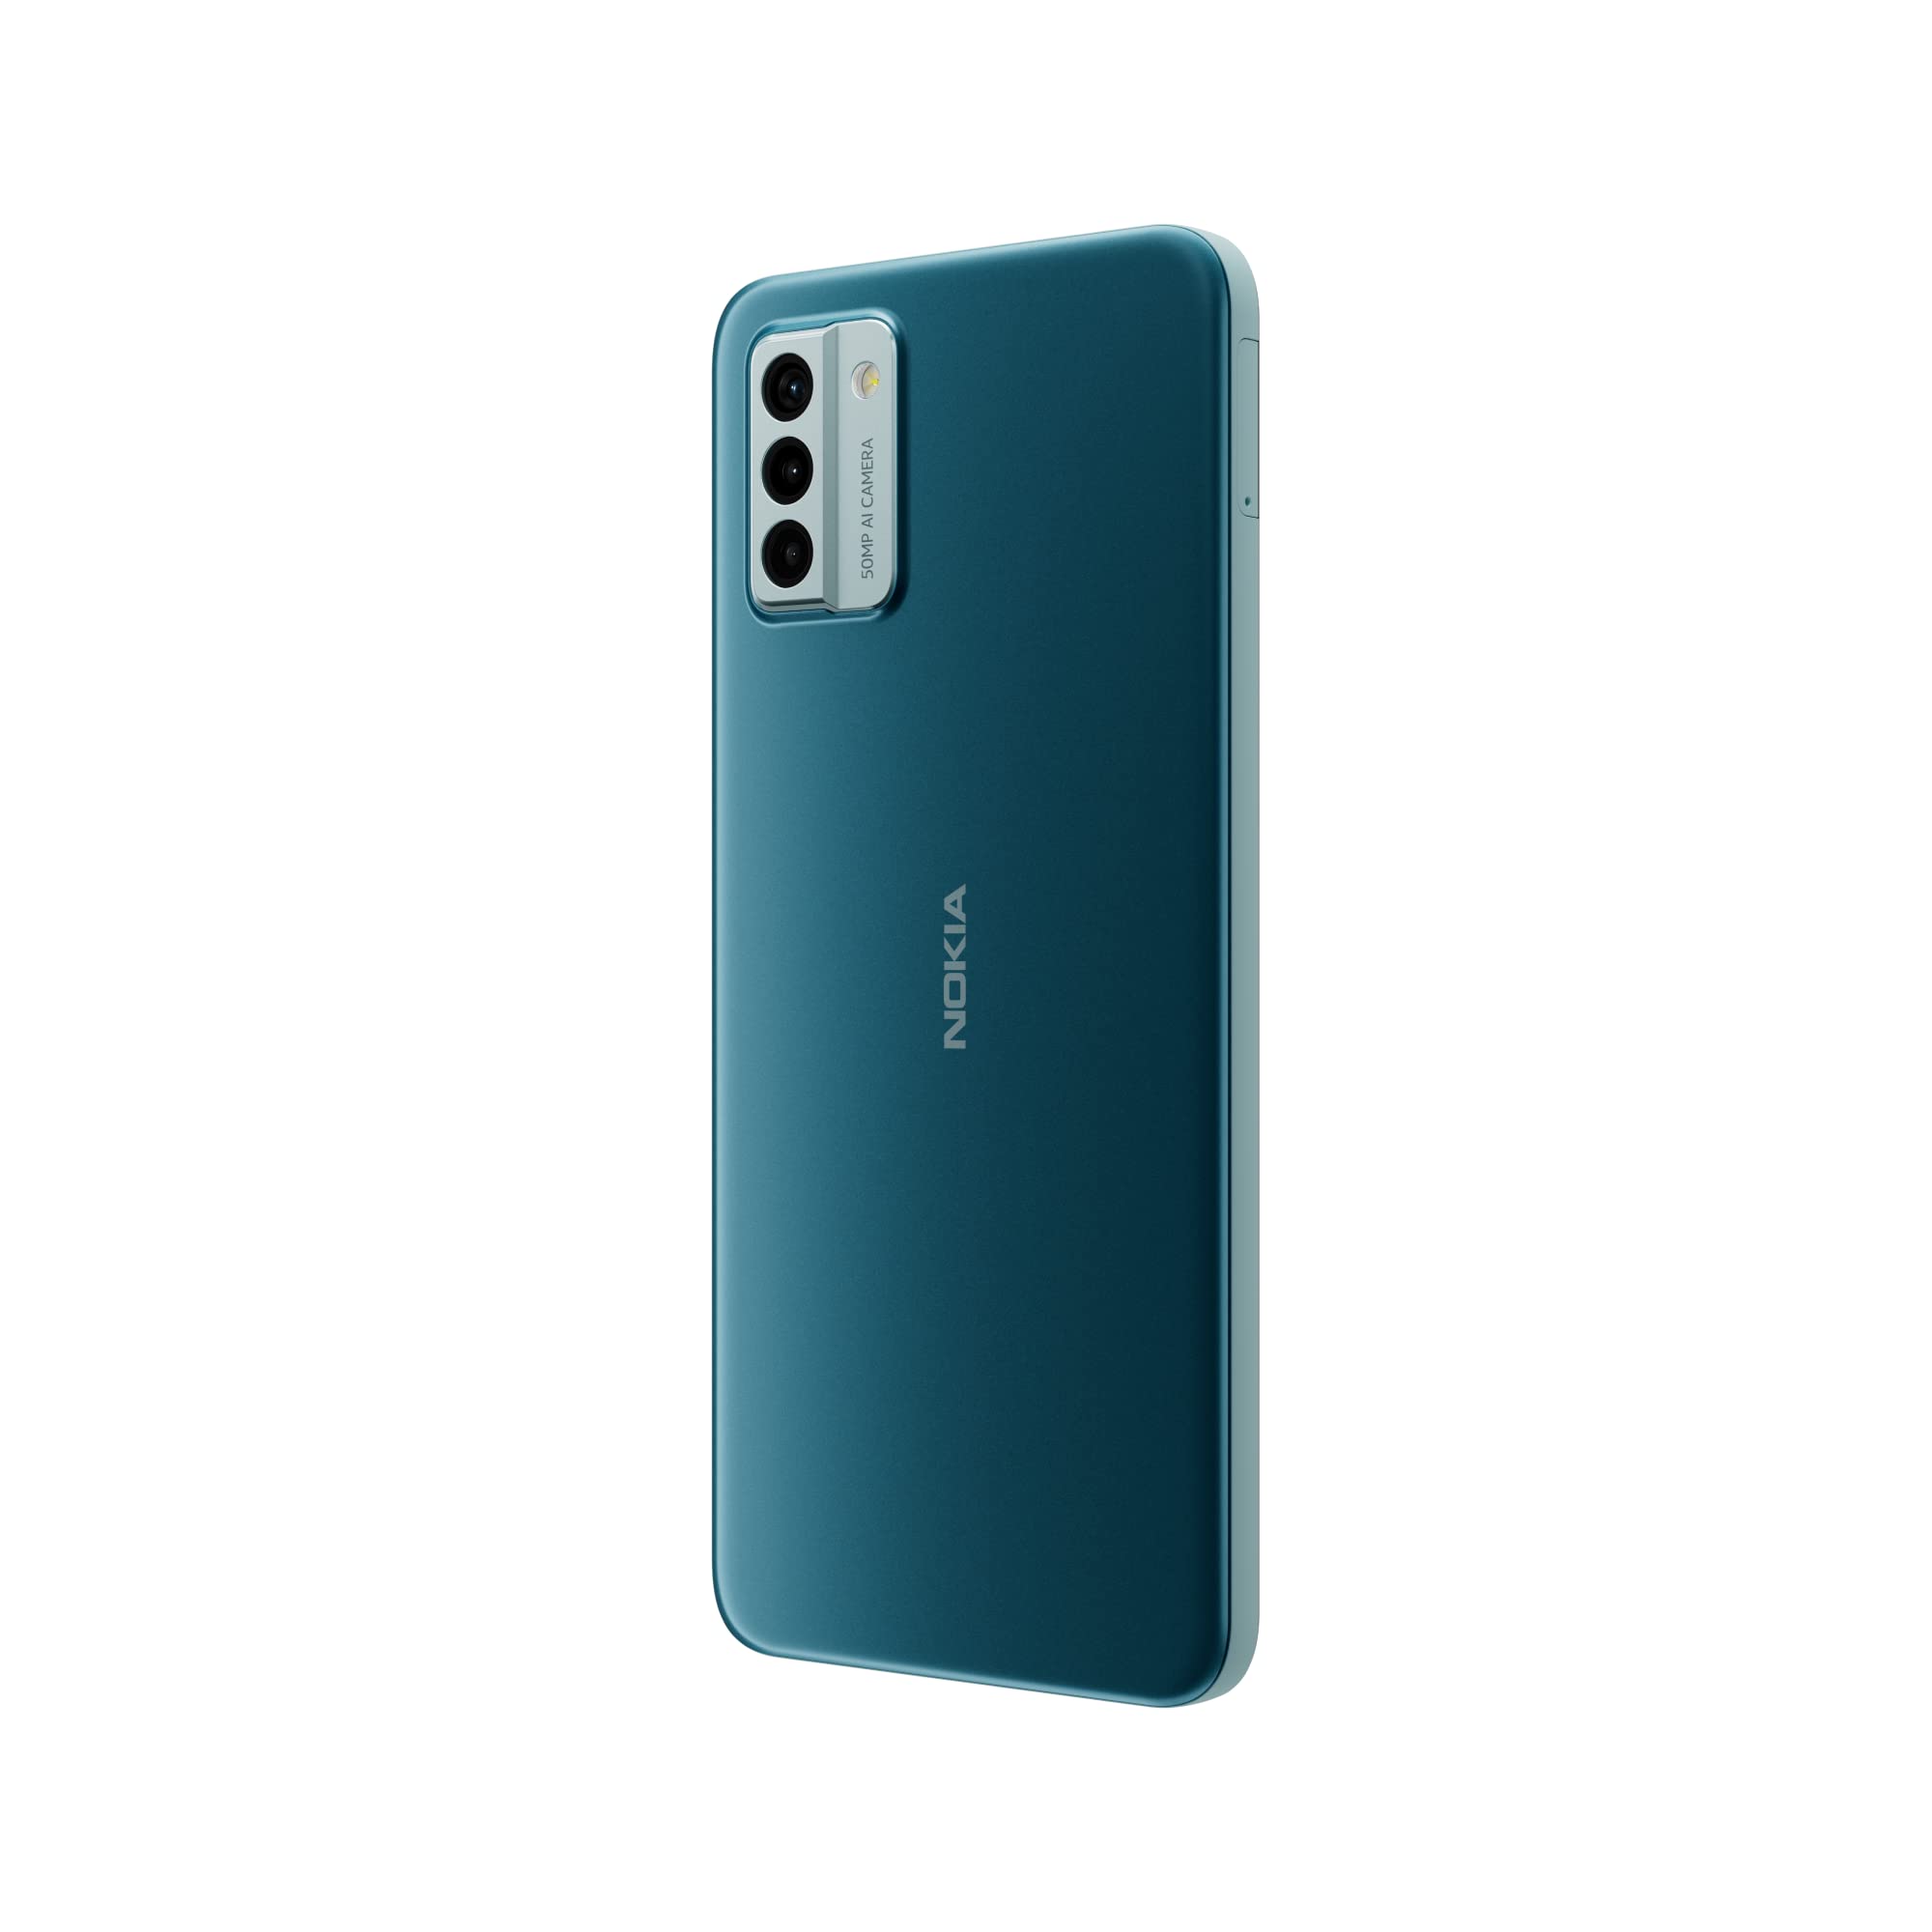 Nokia G22 Dual-Sim 128GB ROM + 4GB RAM (GSM only | No CDMA) Factory Unlocked 4G/LTE Smartphone (Lagoon Blue) - International Version